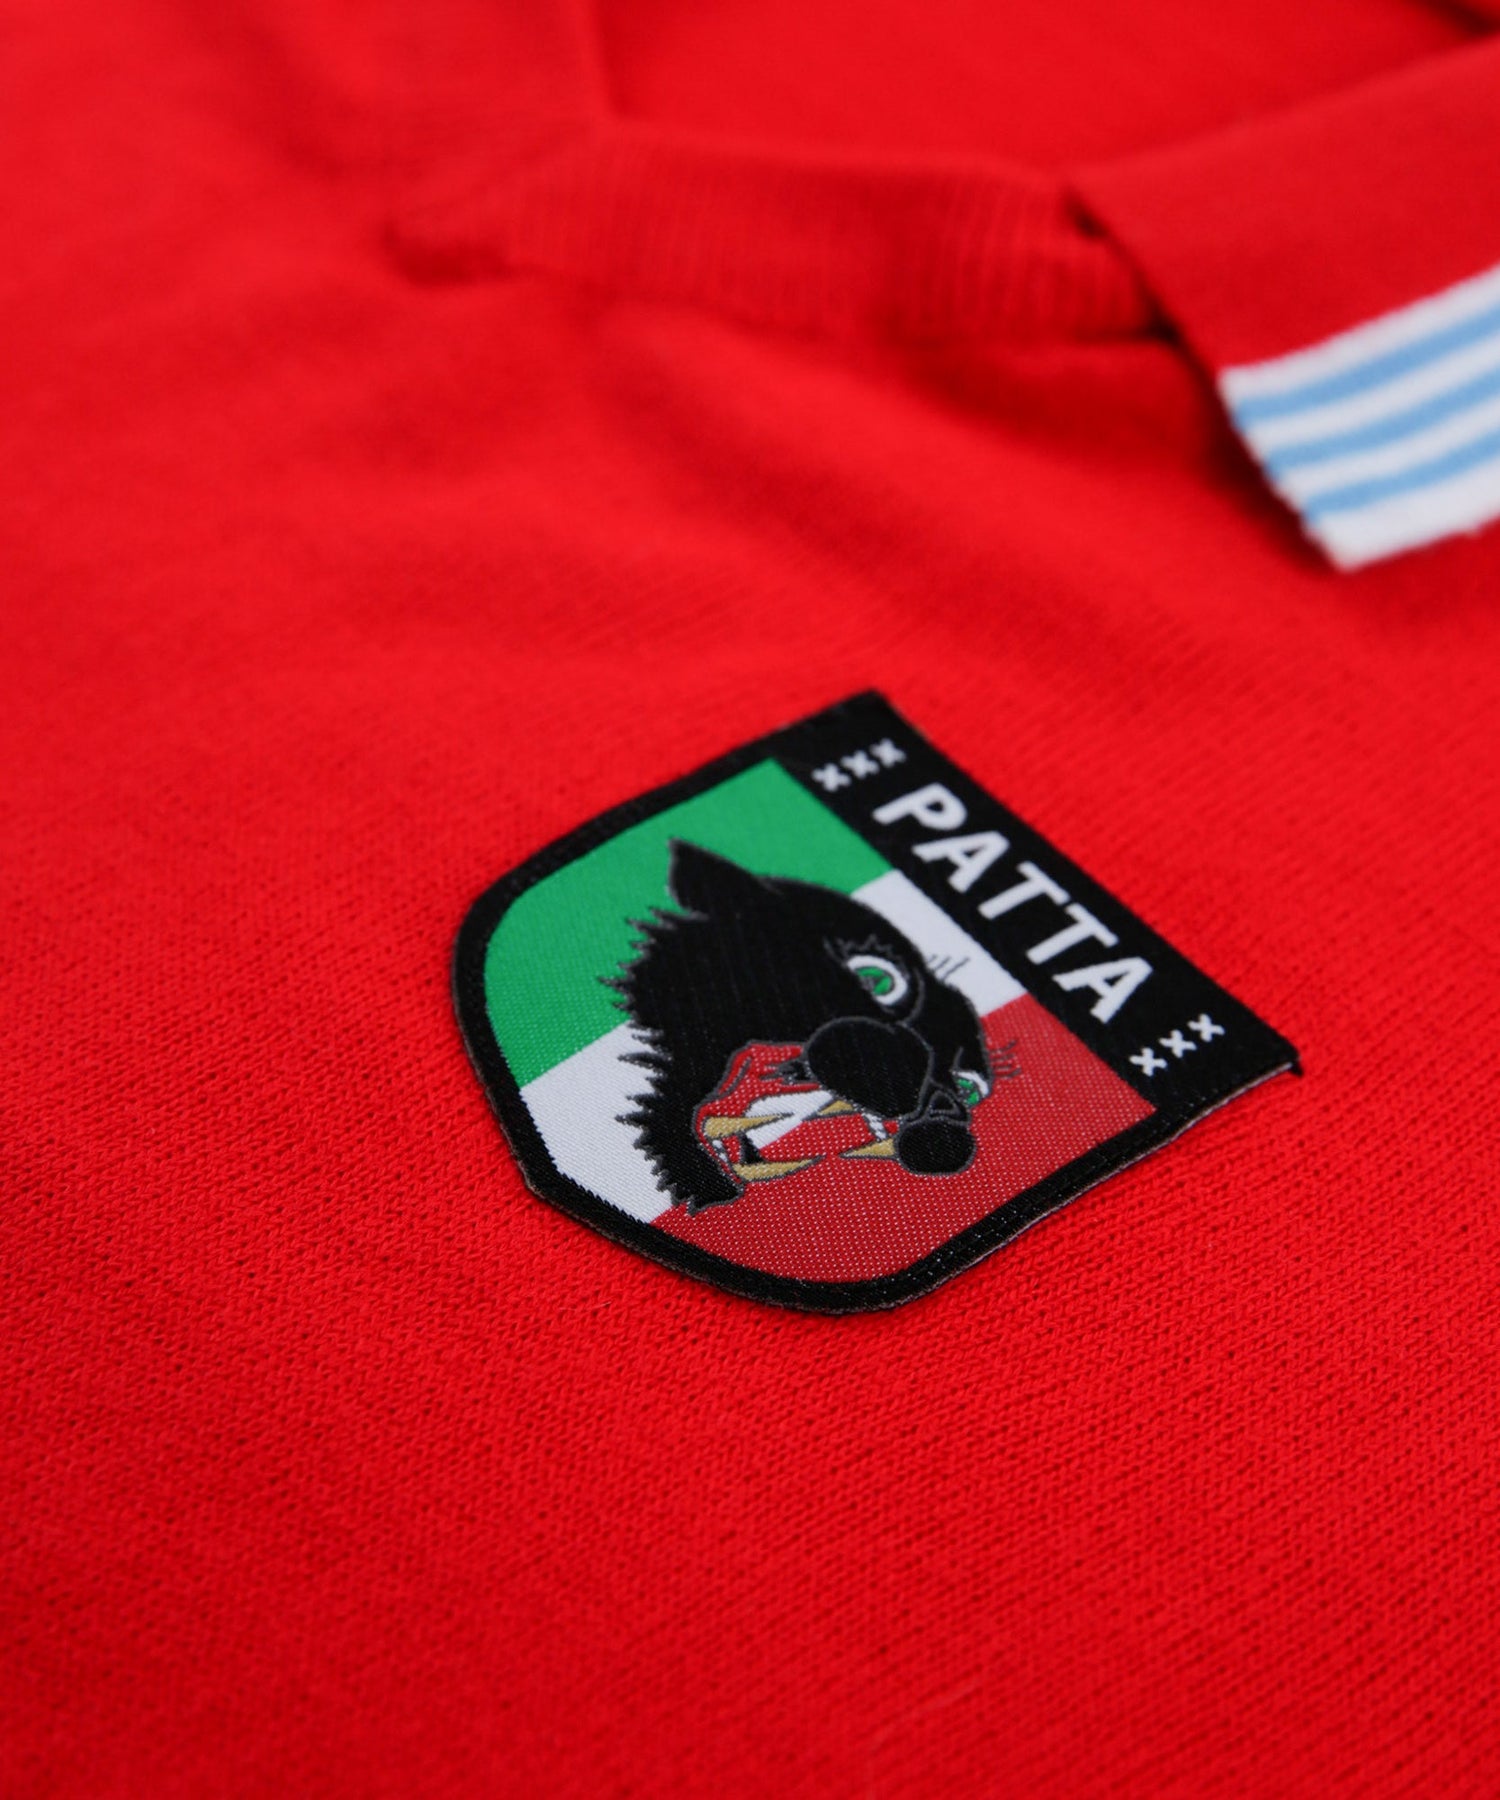 NR x Patta No. 10 Long Sleeve Football Jersey (Napoli Red)